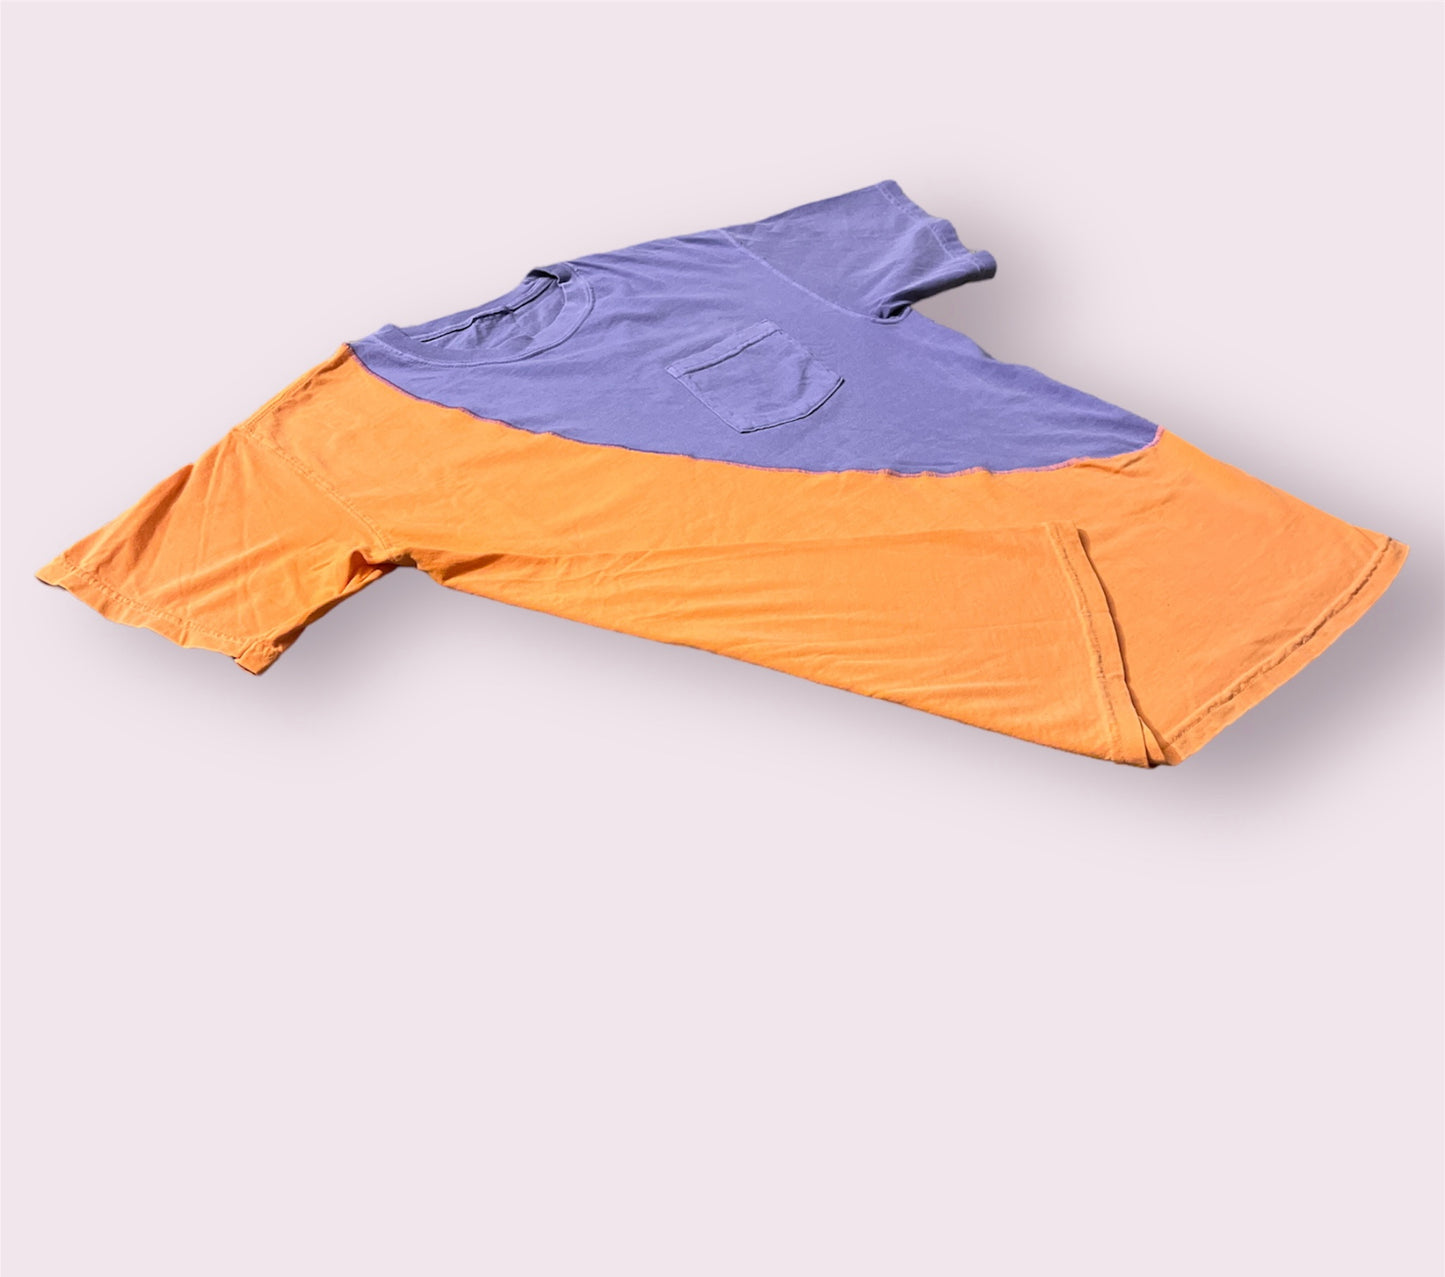 Orange/Purple T-Shirt MD